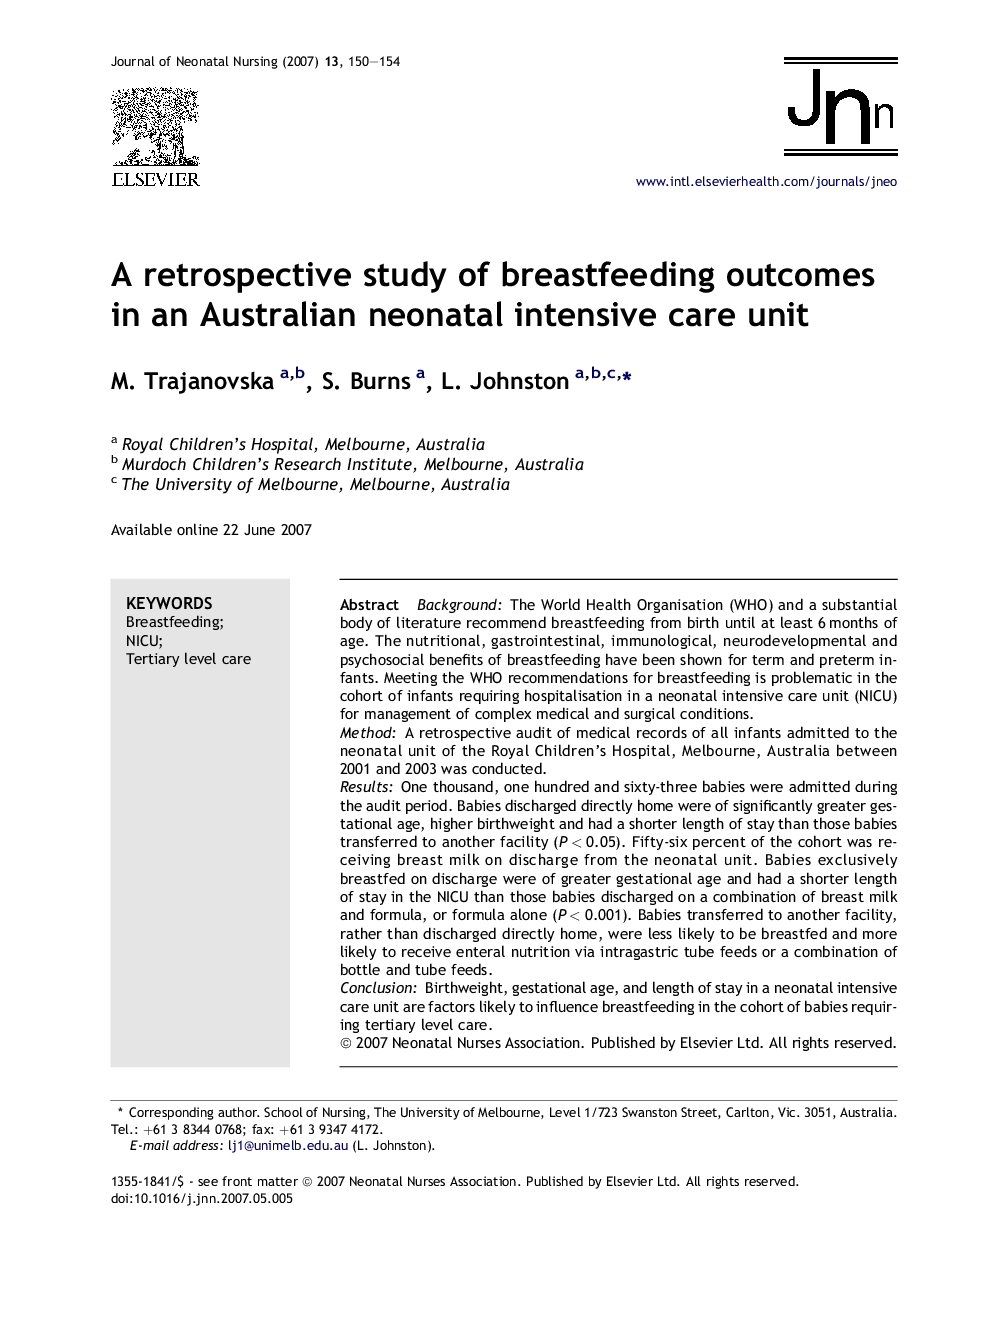 A retrospective study of breastfeeding outcomes in an Australian neonatal intensive care unit